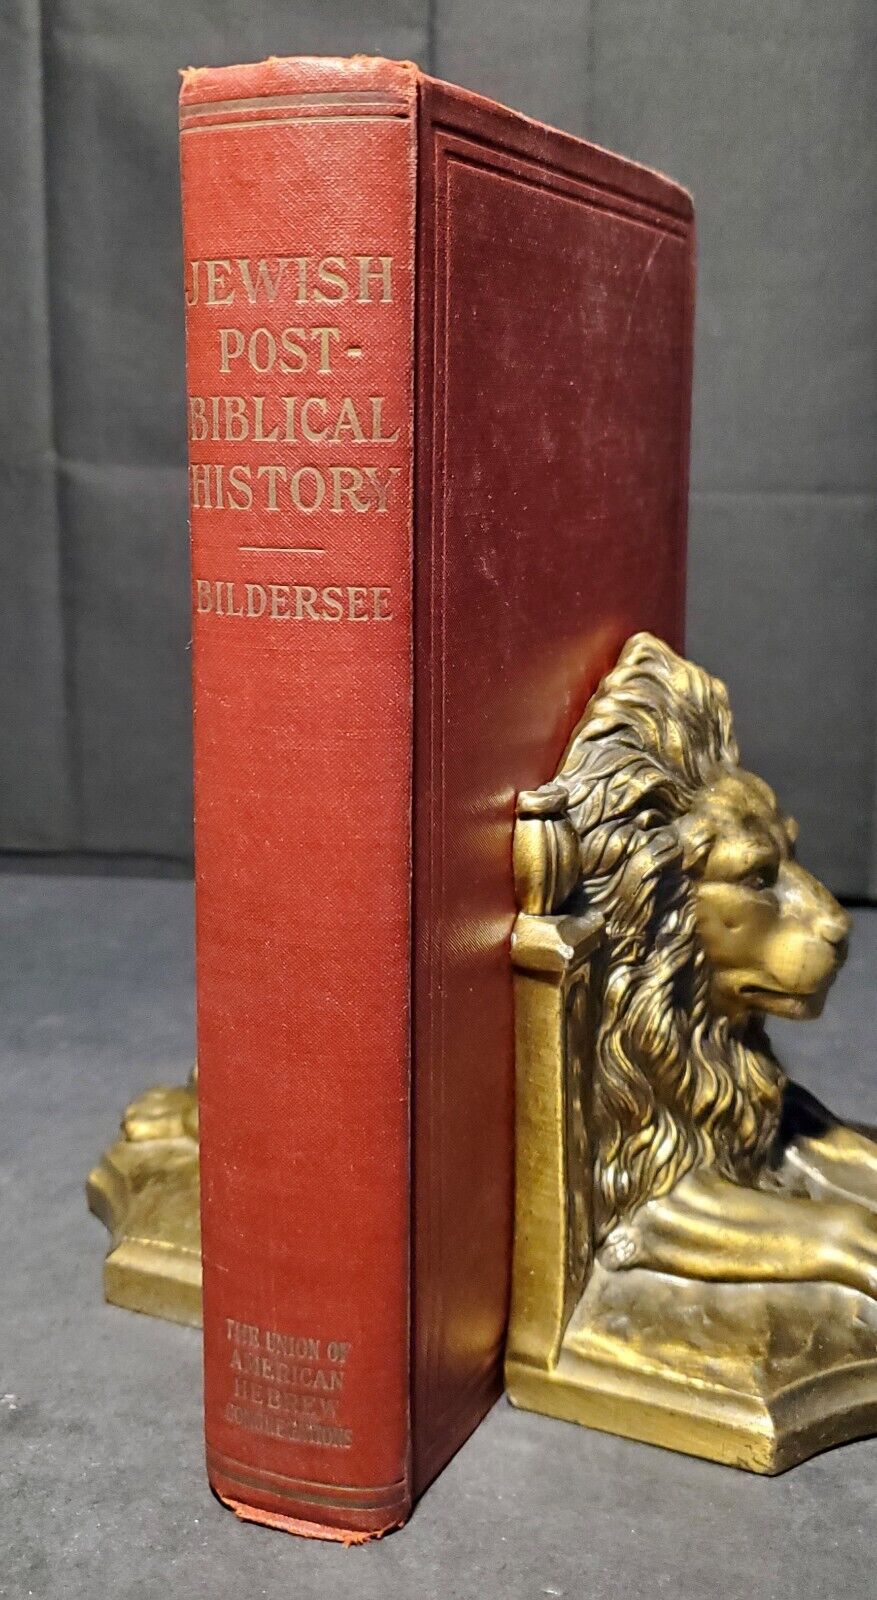 Jewish Post-Biblical History Through Great Personalities by Adele Bildersee 1918